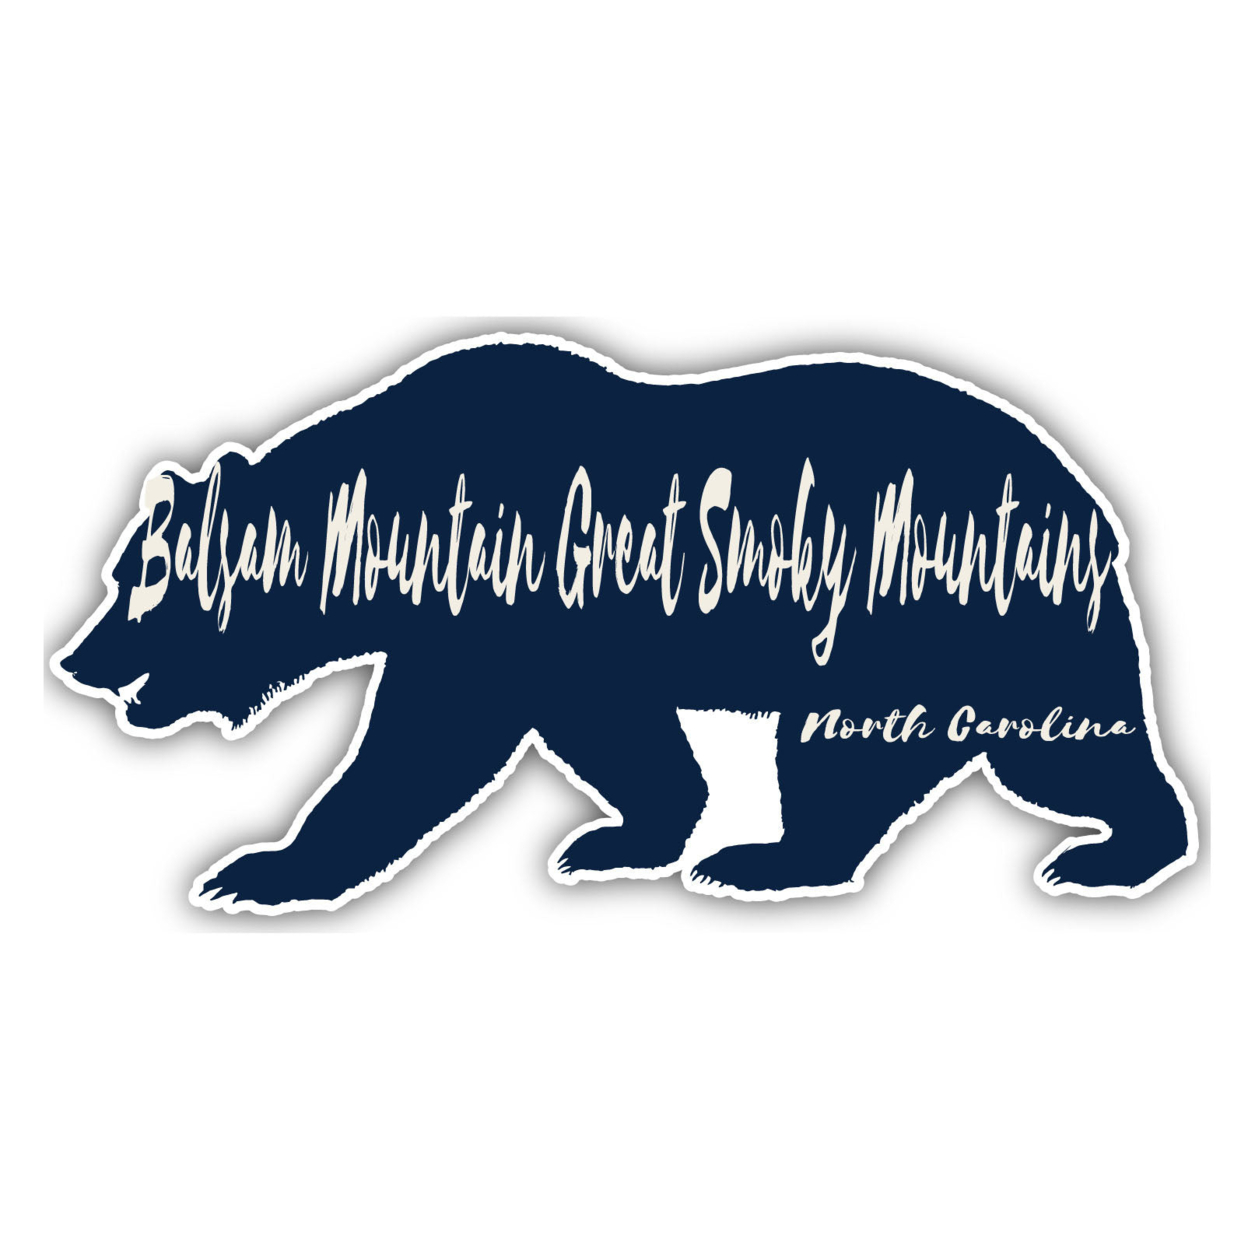 Balsam Mountain Great Smoky Mountains North Carolina Souvenir Decorative Stickers (Choose Theme And Size) - Single Unit, 2-Inch, Bear